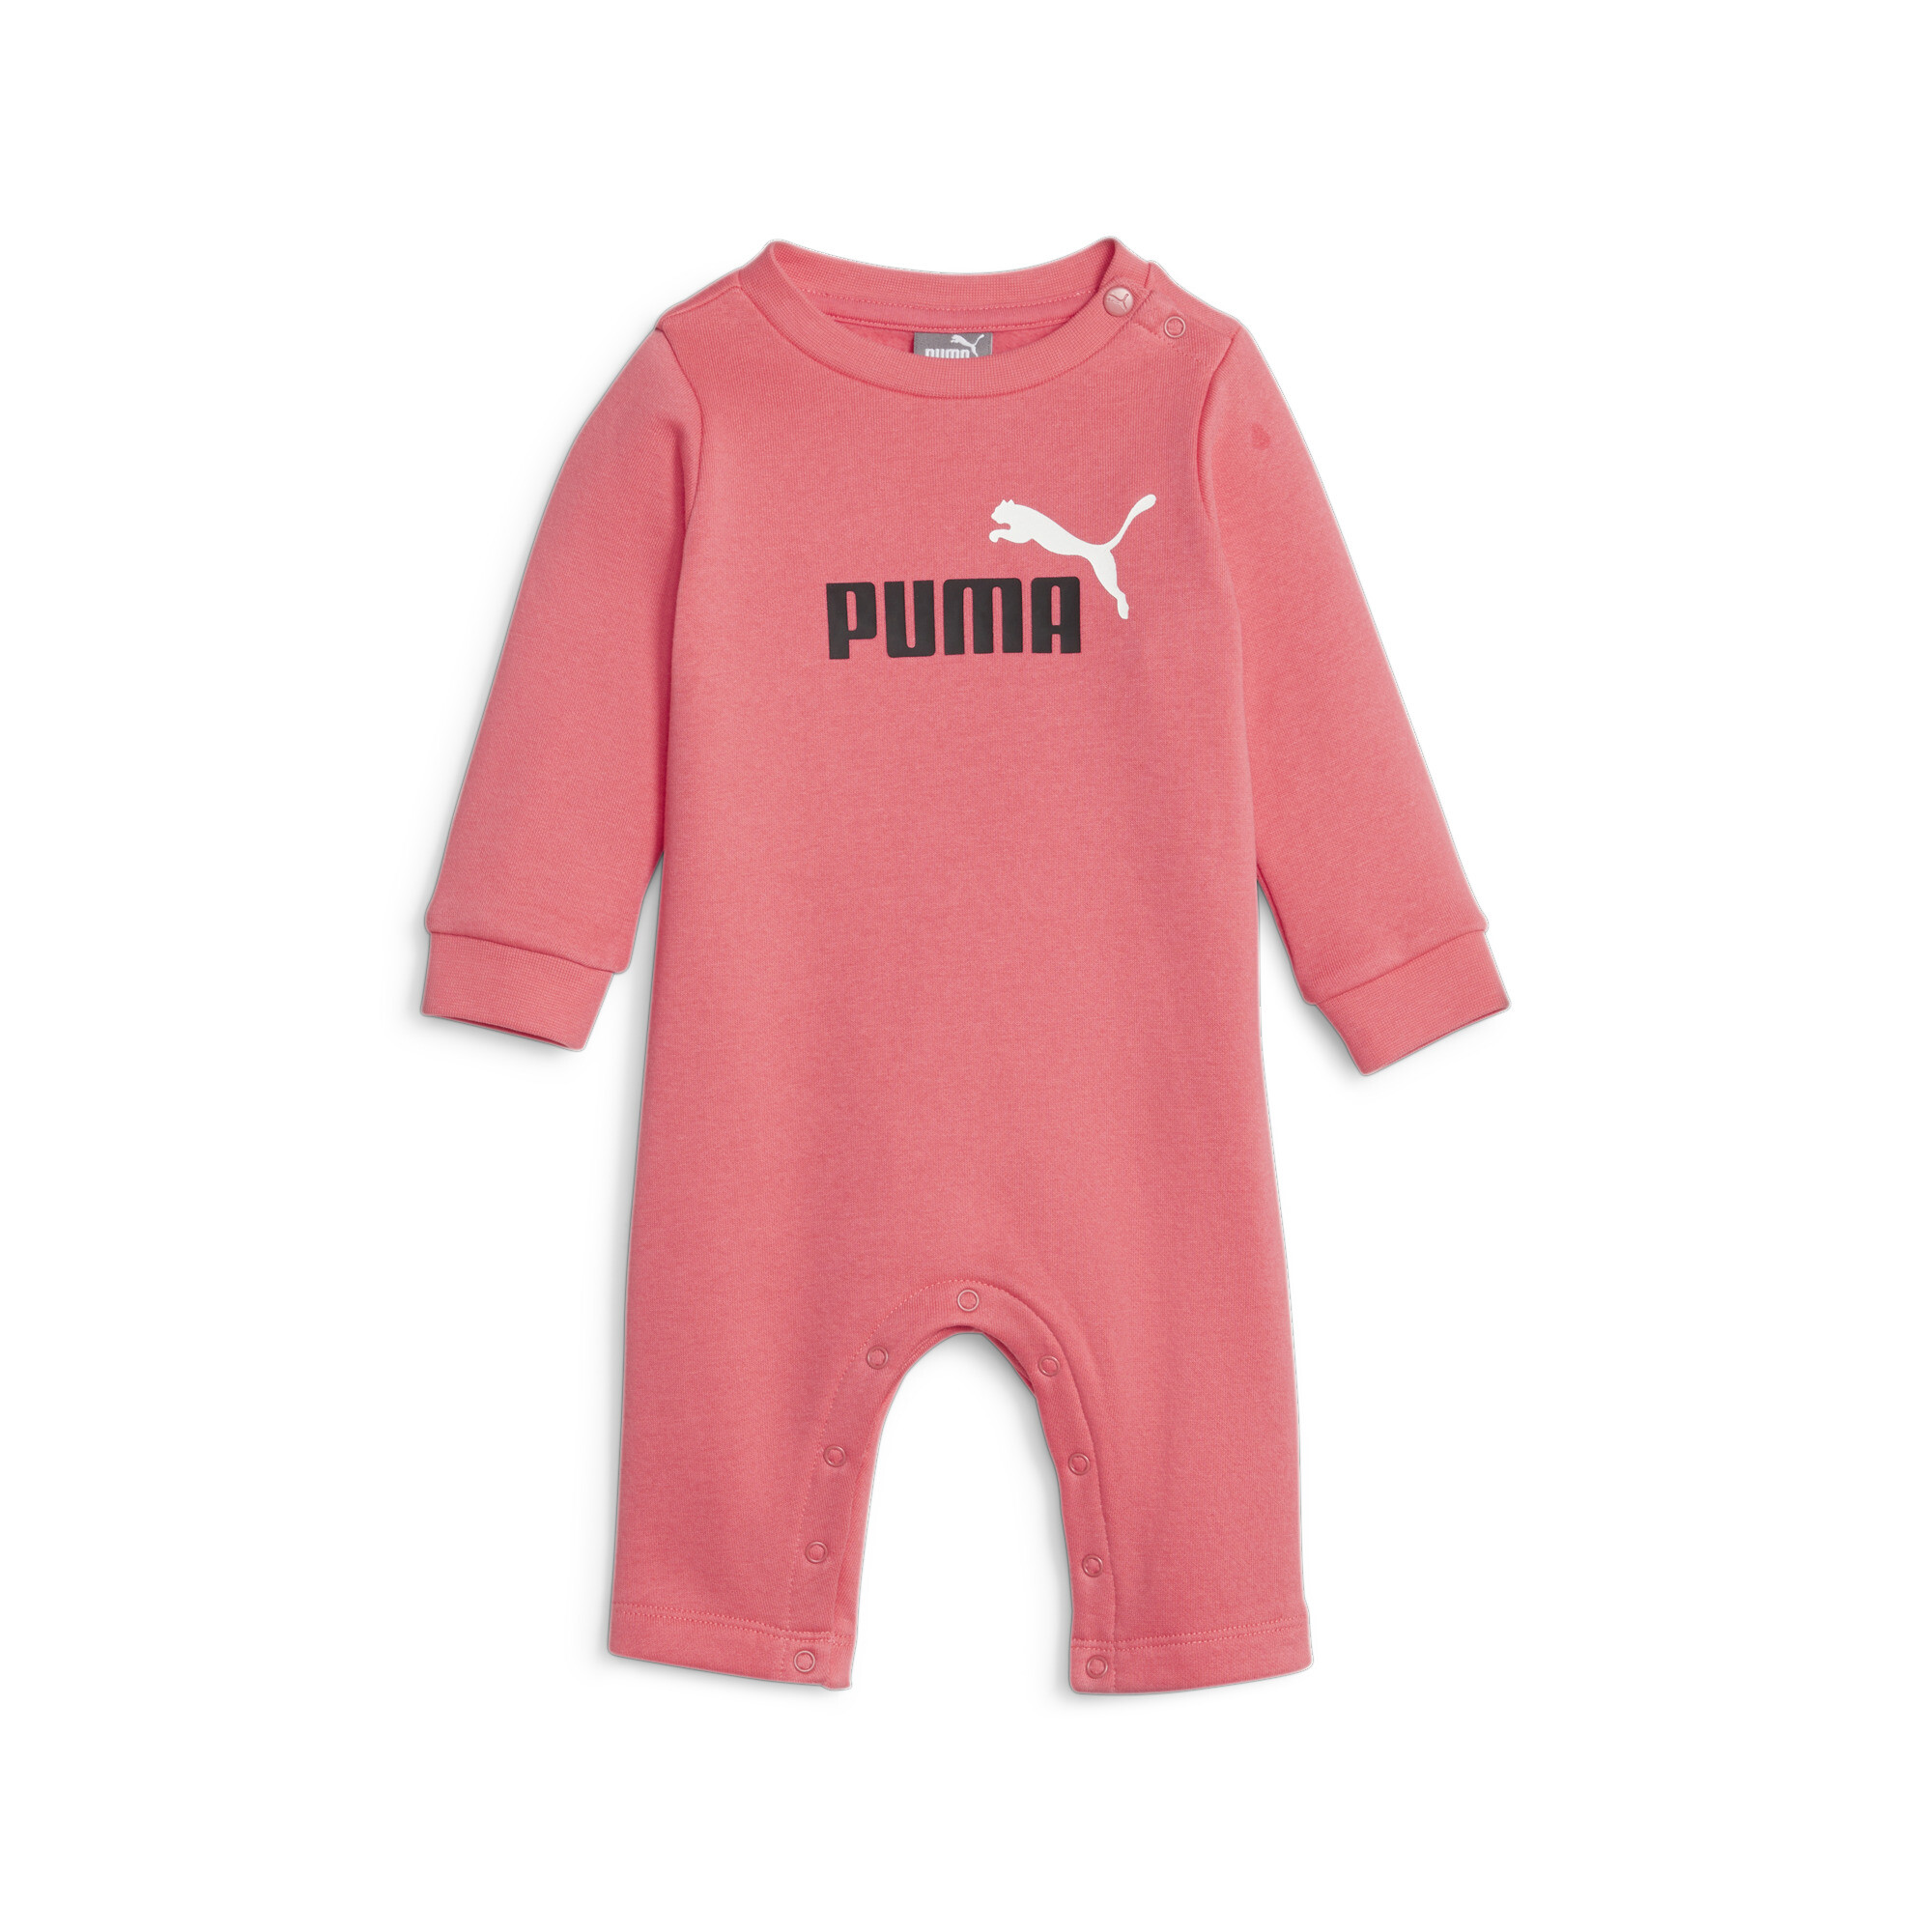 Puma Minicats Newborn Coverall Babies, Pink, Size 2-4M, Clothing